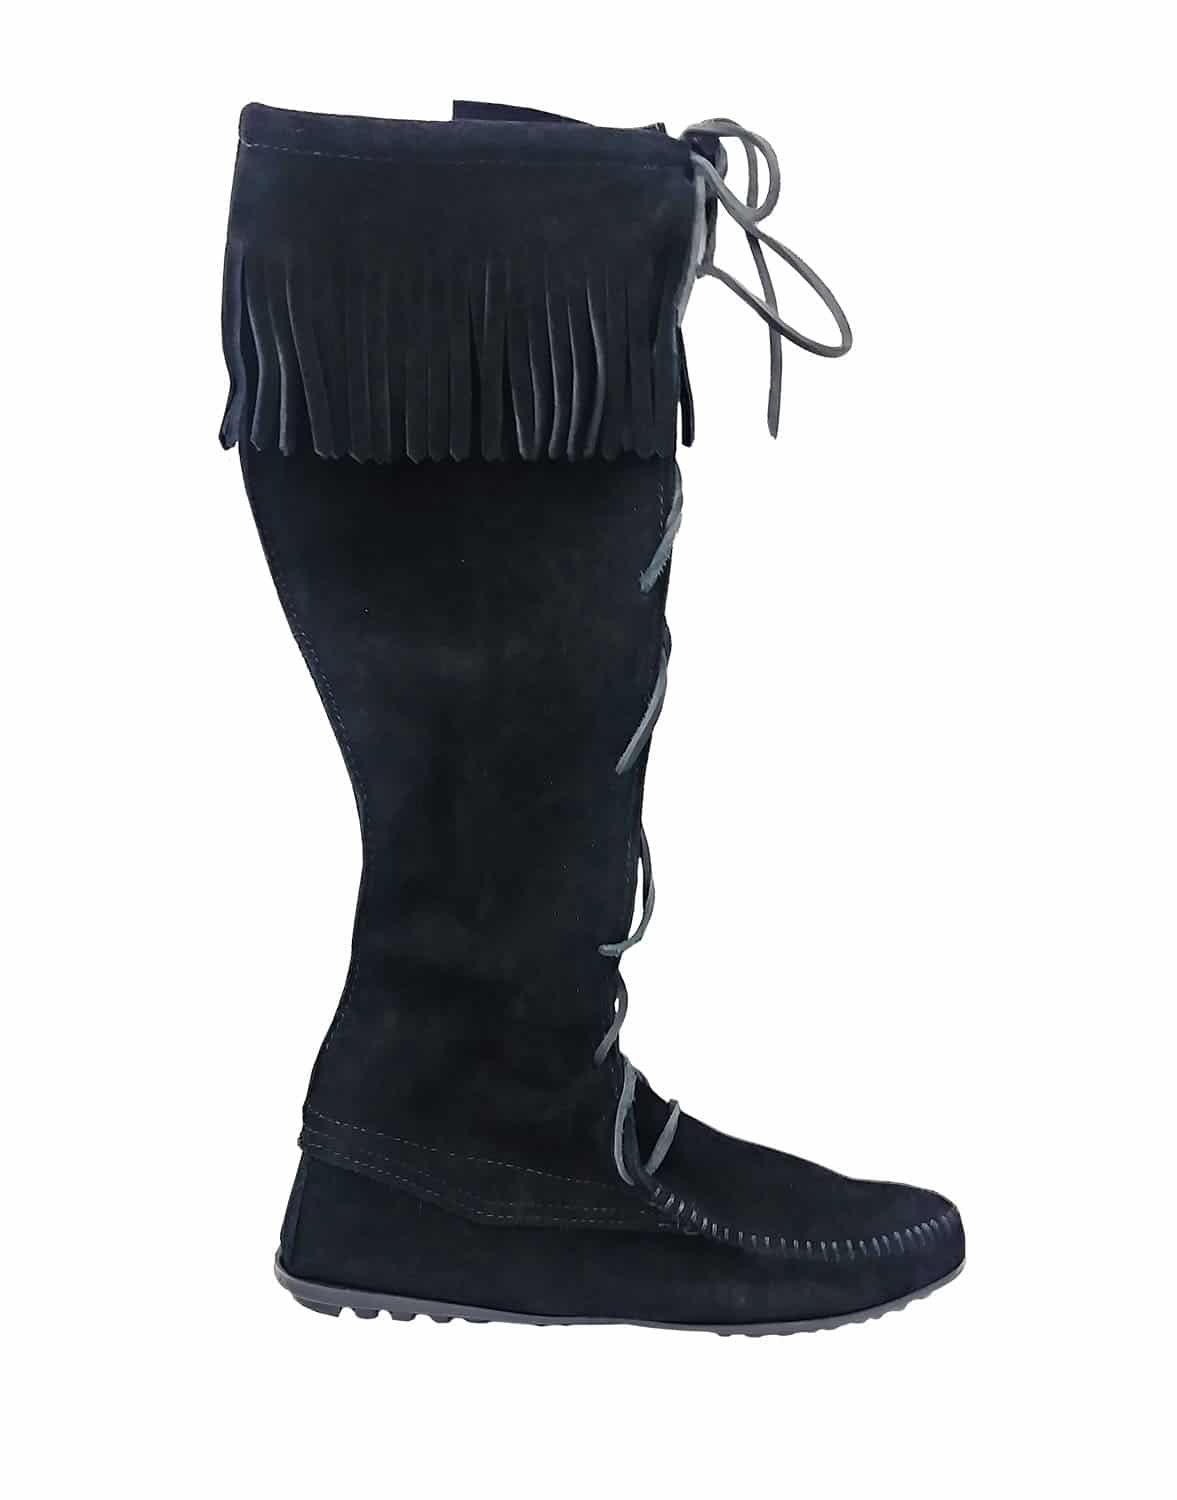 suede boots women's knee high